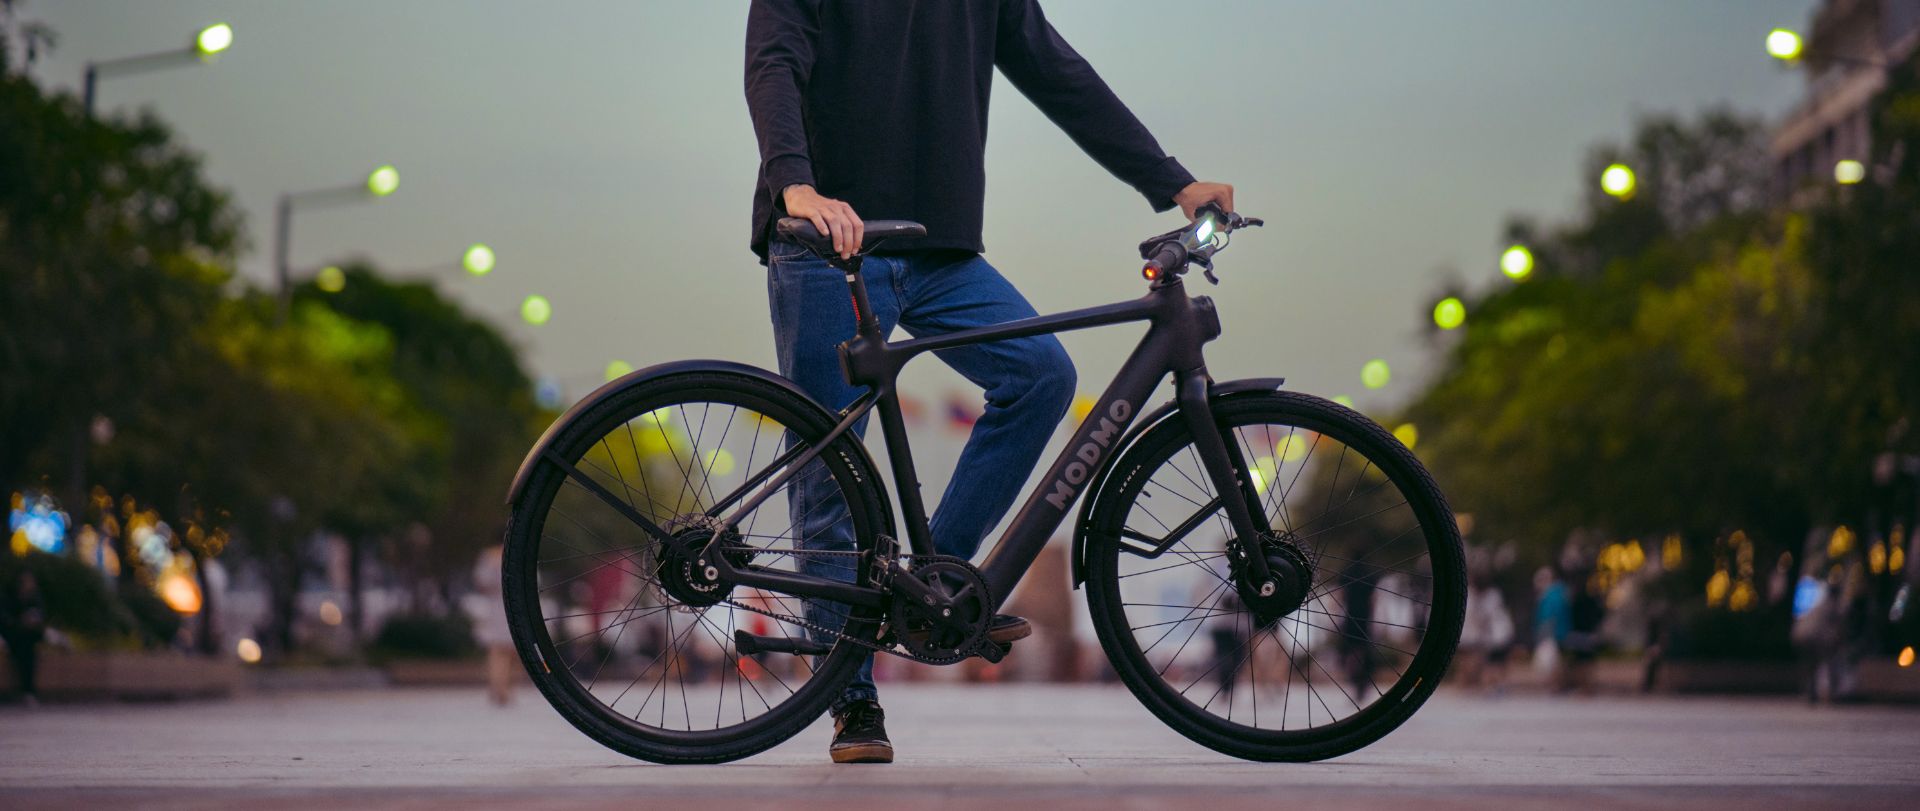 Modmo Saigon+ Electric Bicycle - RRP £2800 - Size M (Rider: 155-175cm) - Image 11 of 19